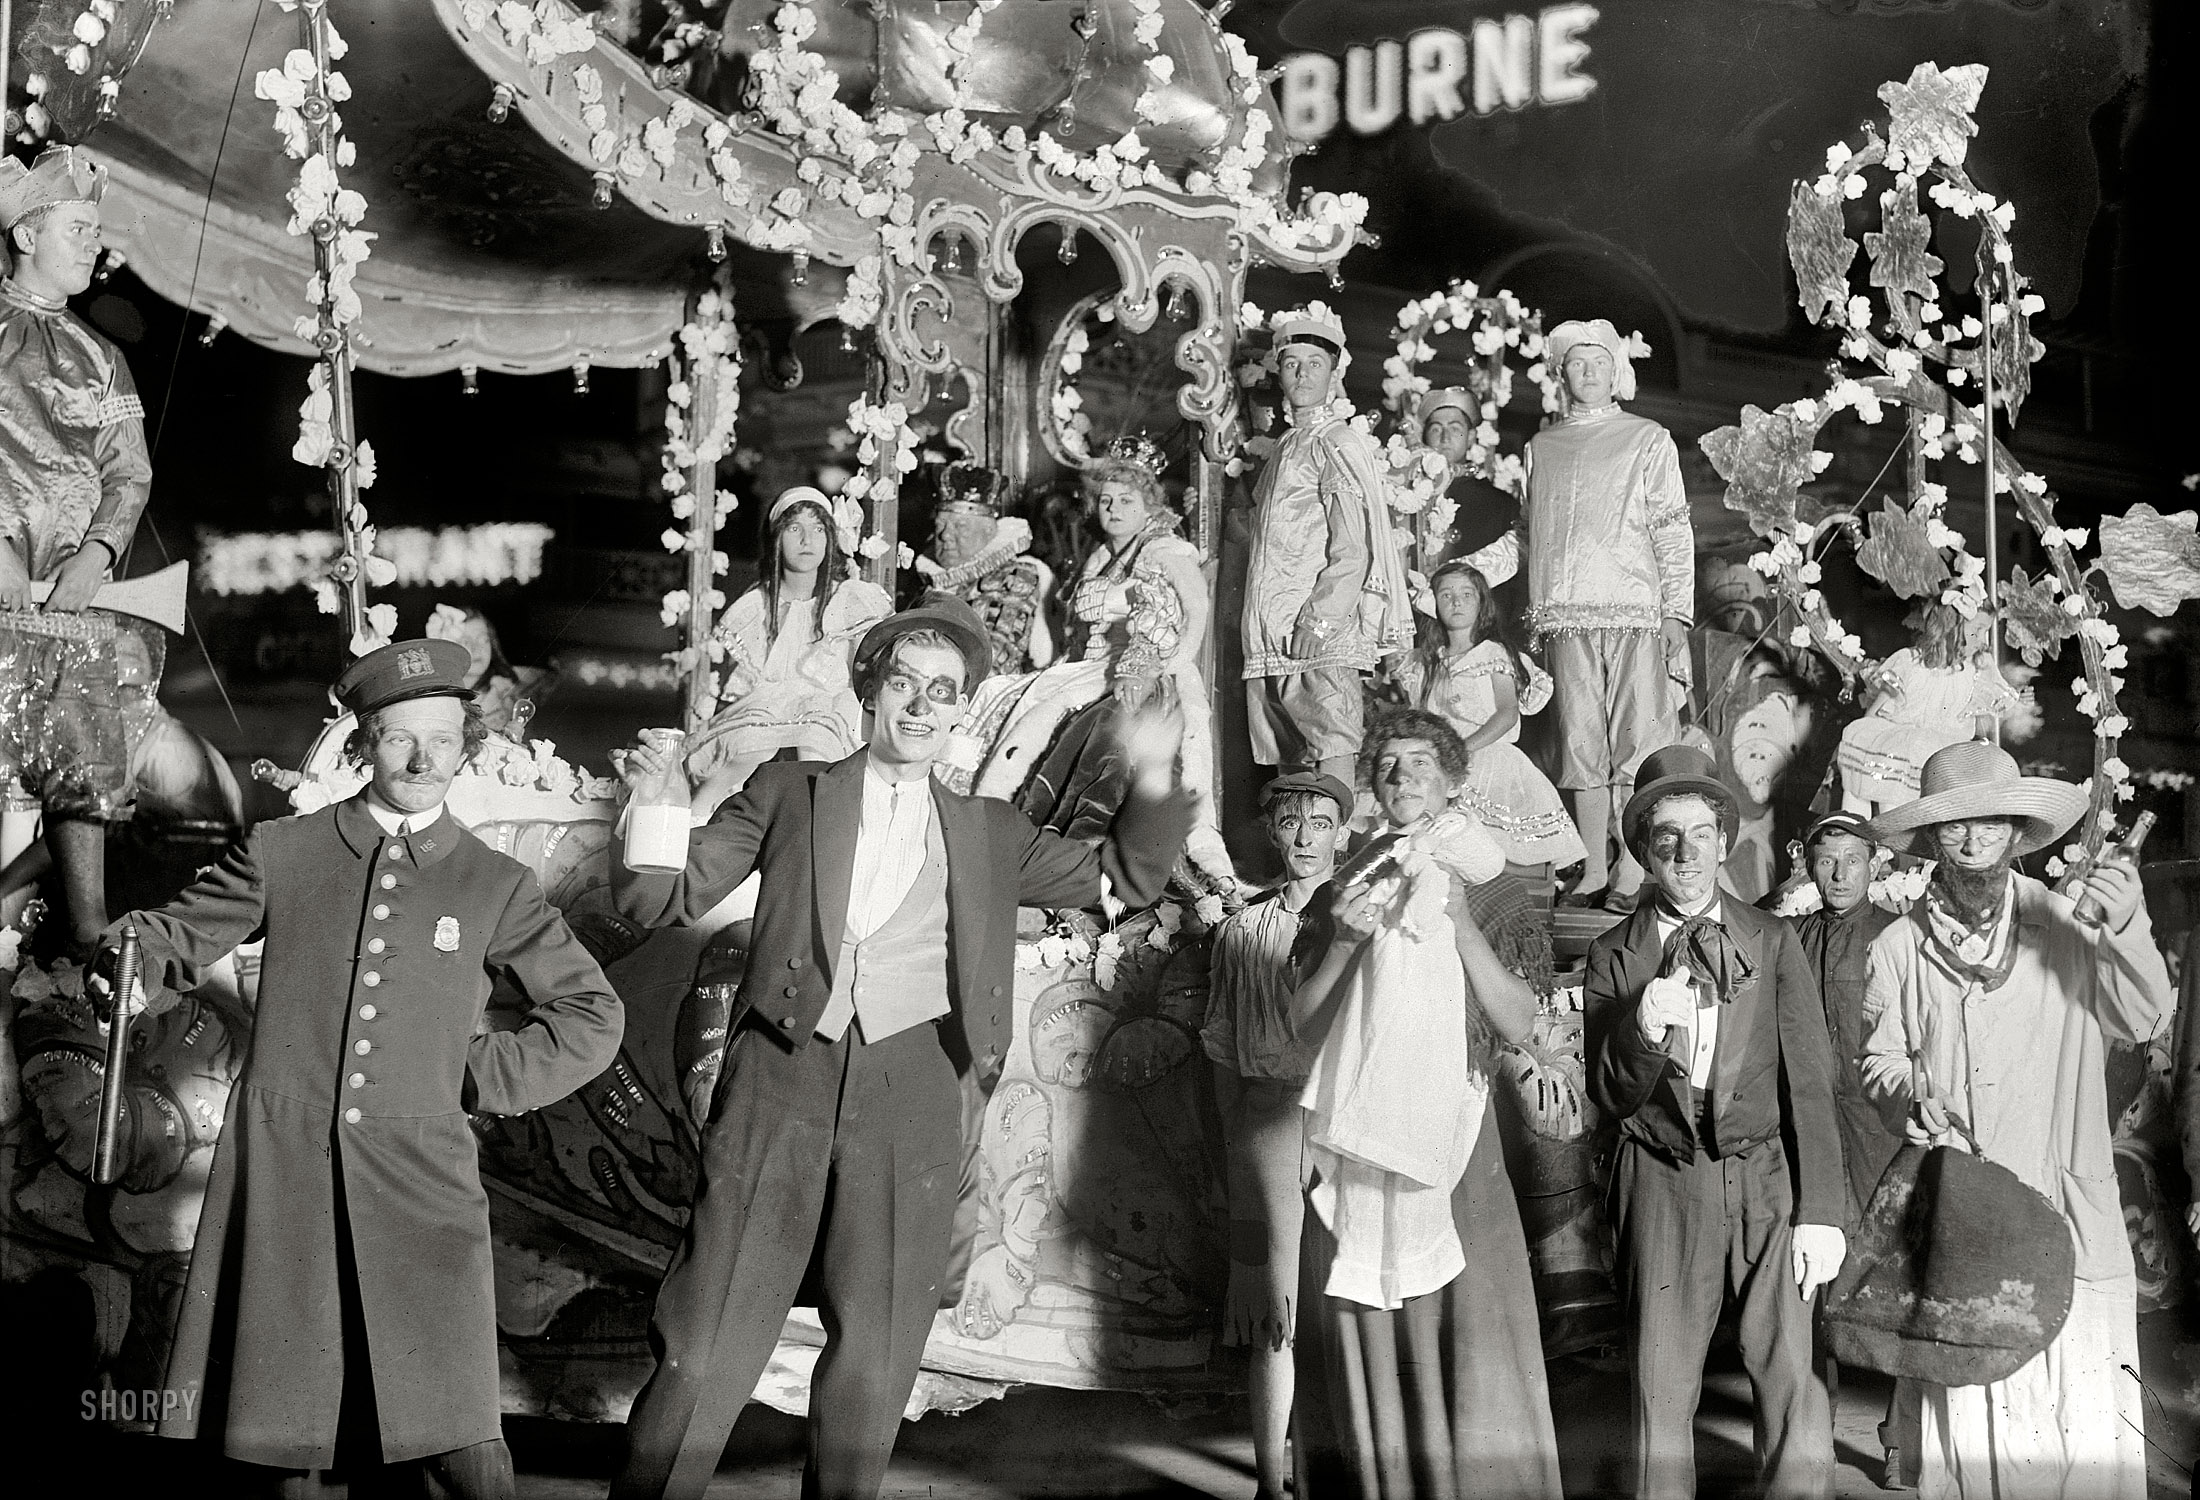 New York circa 1913. "Mardi Gras parade, Coney Island." 5x7 glass negative, George Grantham Bain Collection. View full size.